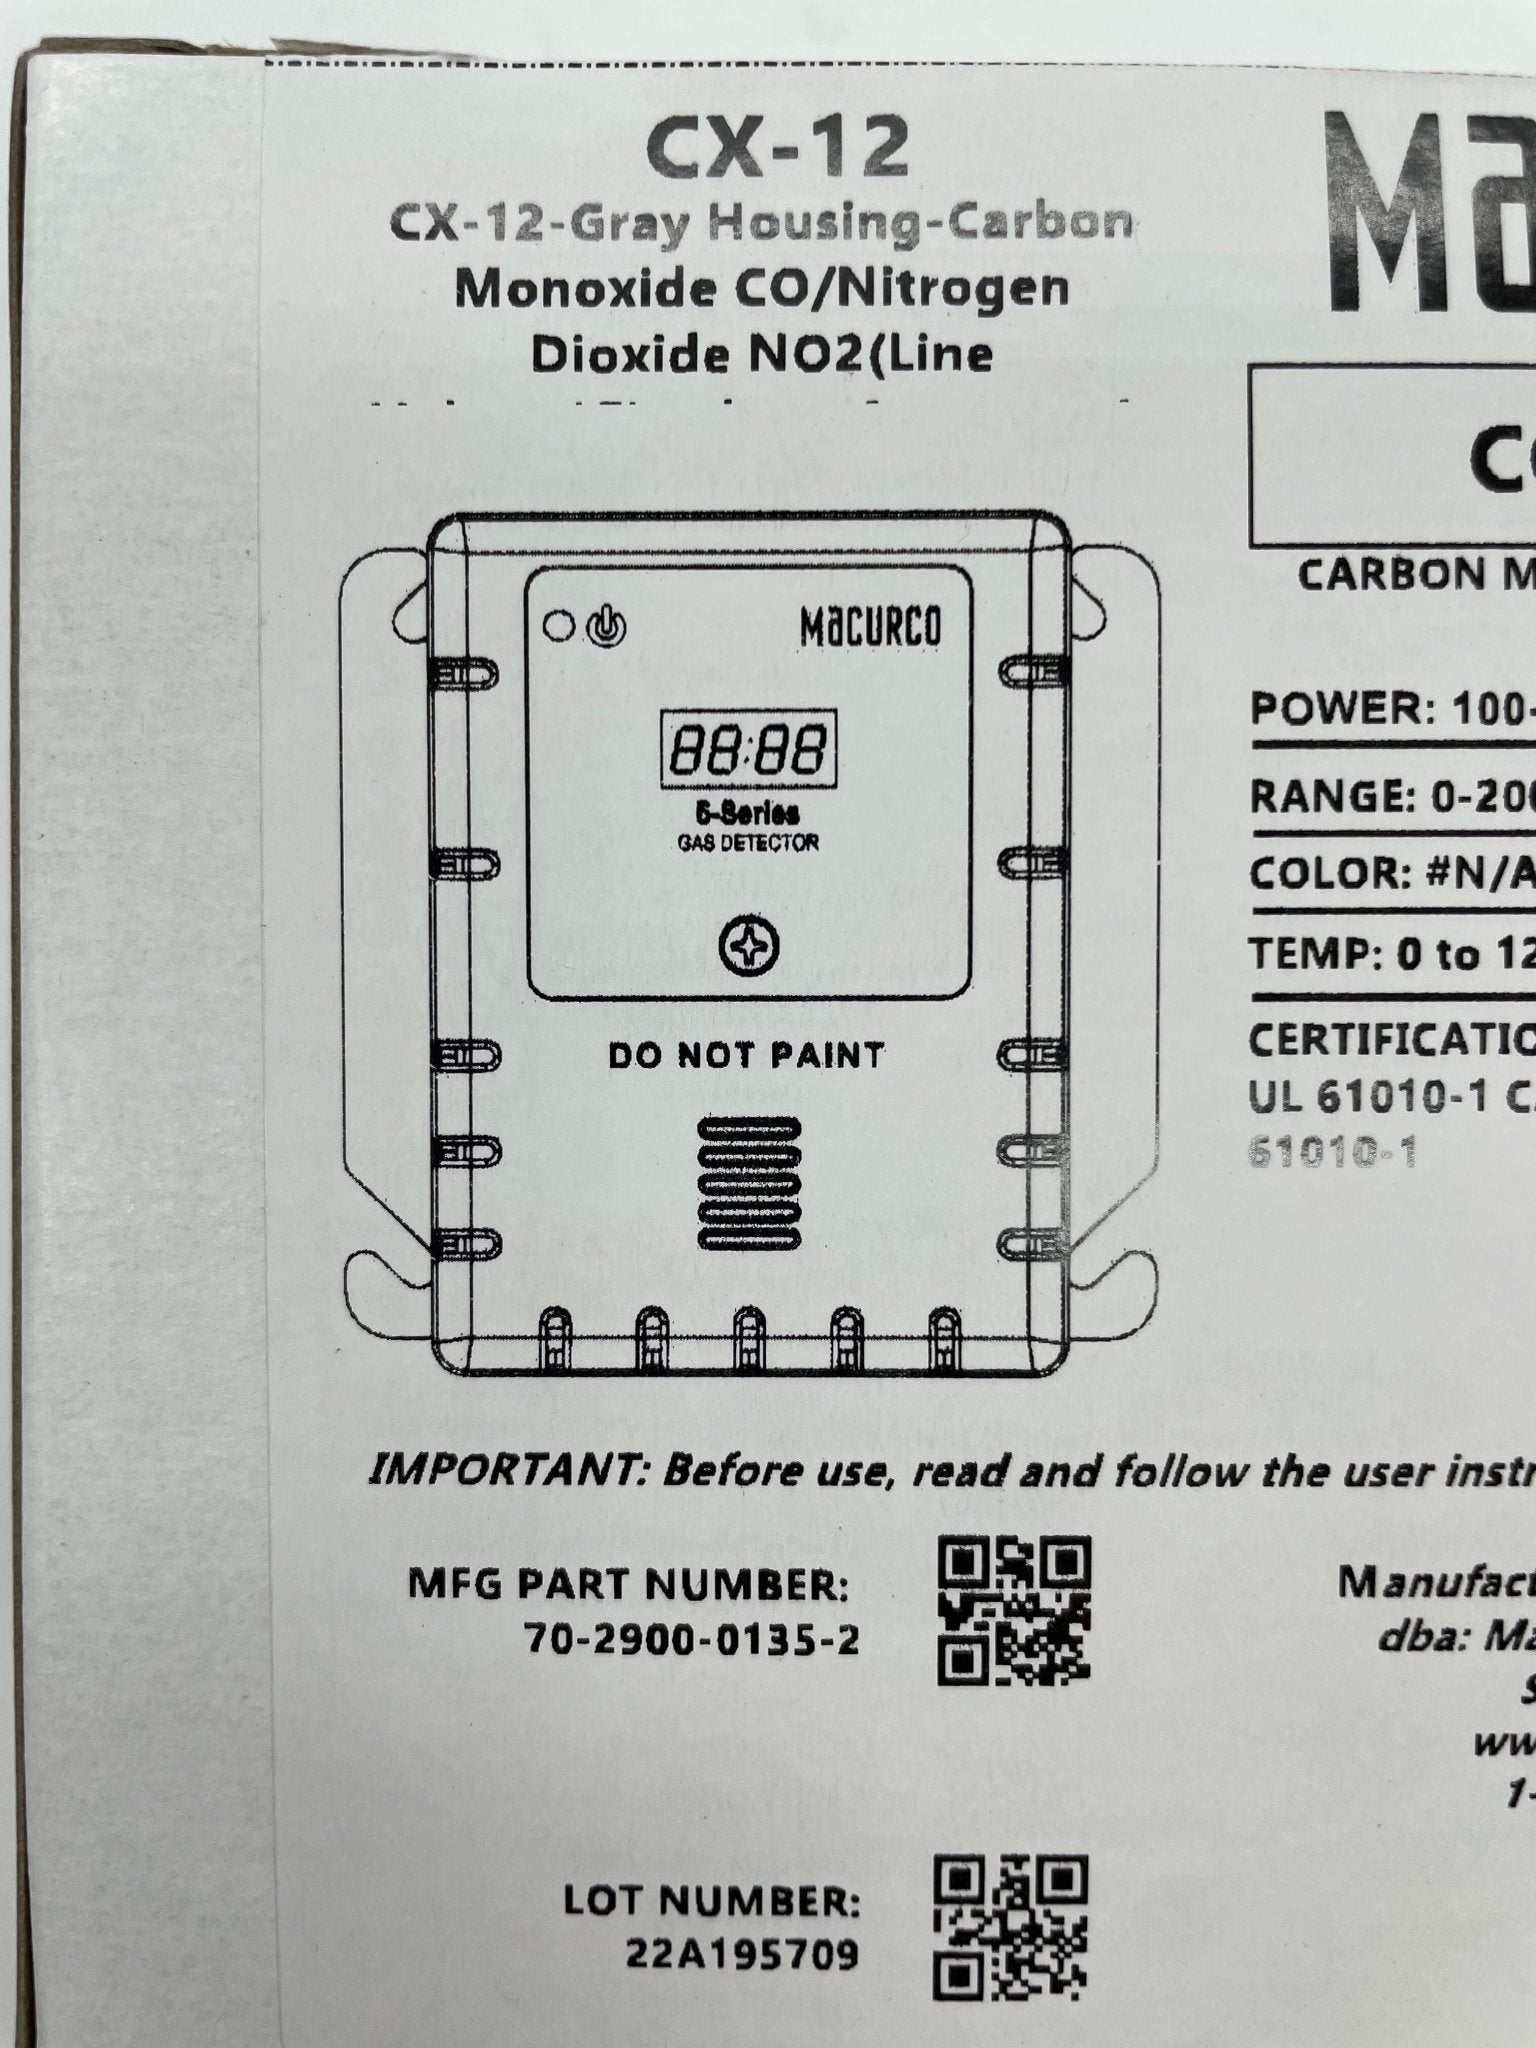 Macurco CX-12 Nitrogen Dioxide Gas Detector - The Fire Alarm Supplier